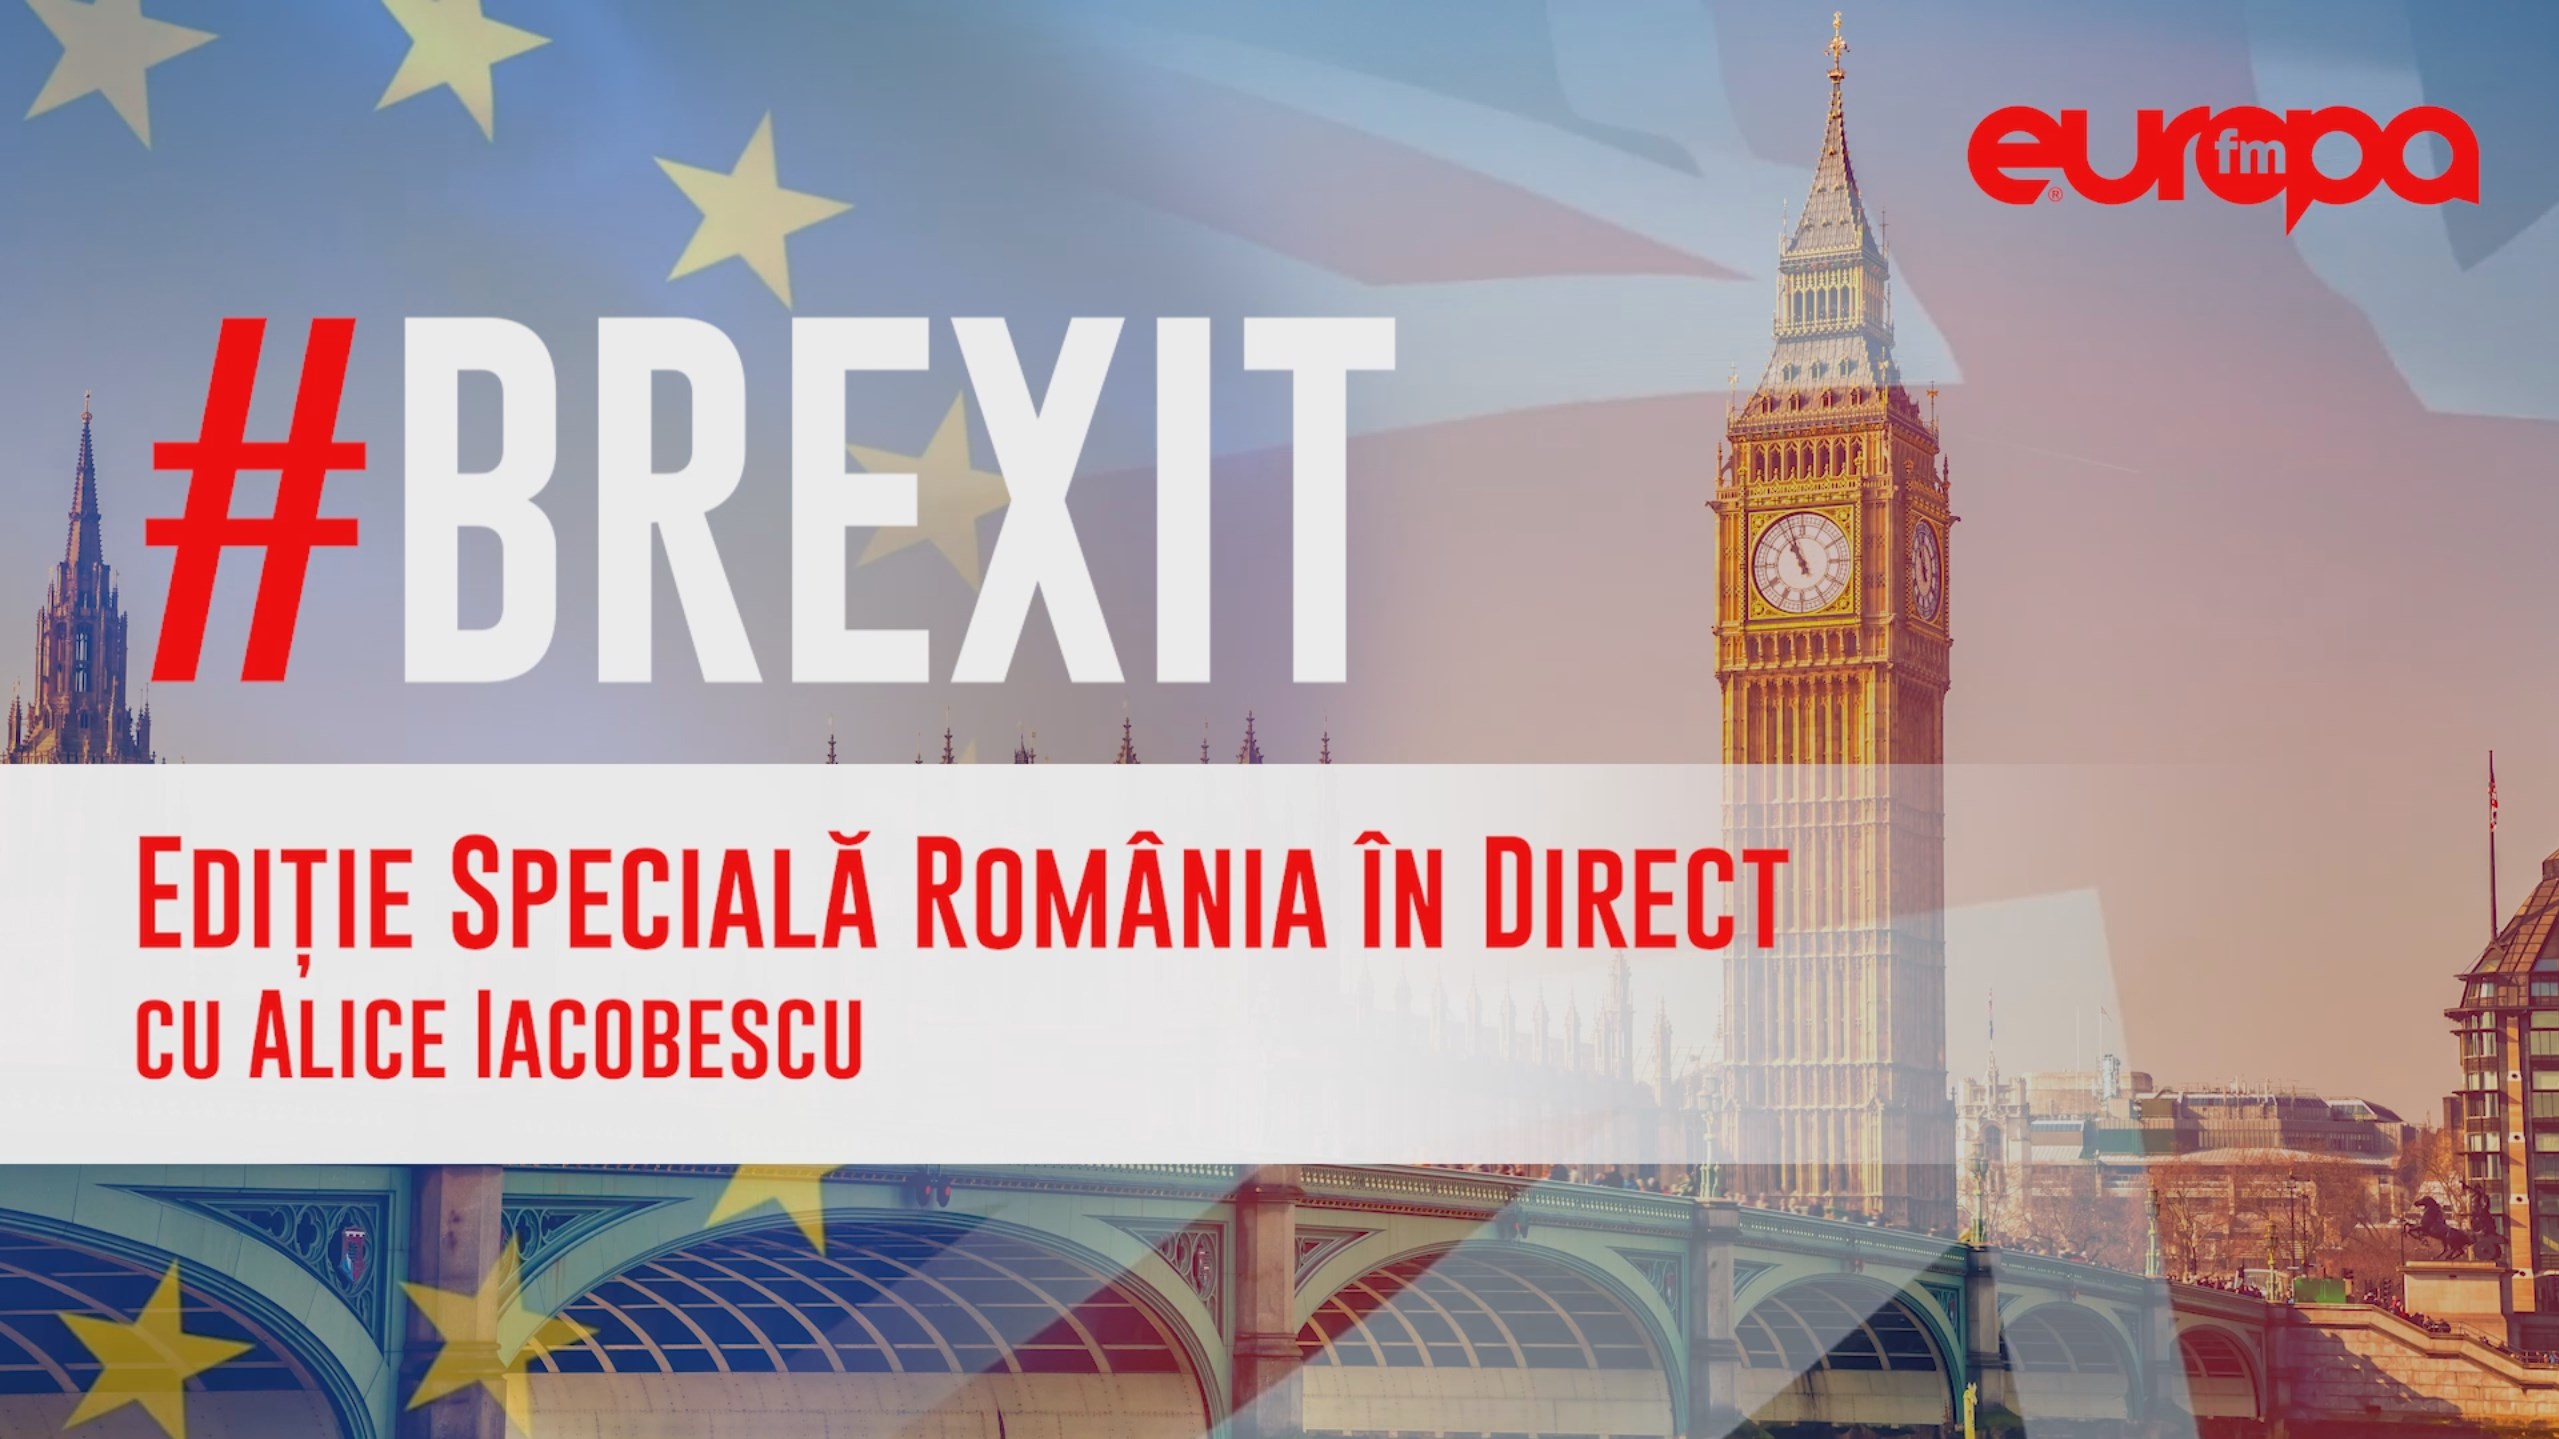 https://www.europafm.ro/wp-content/uploads/2020/01/brexit-in-direct-editie-speciala.jpg